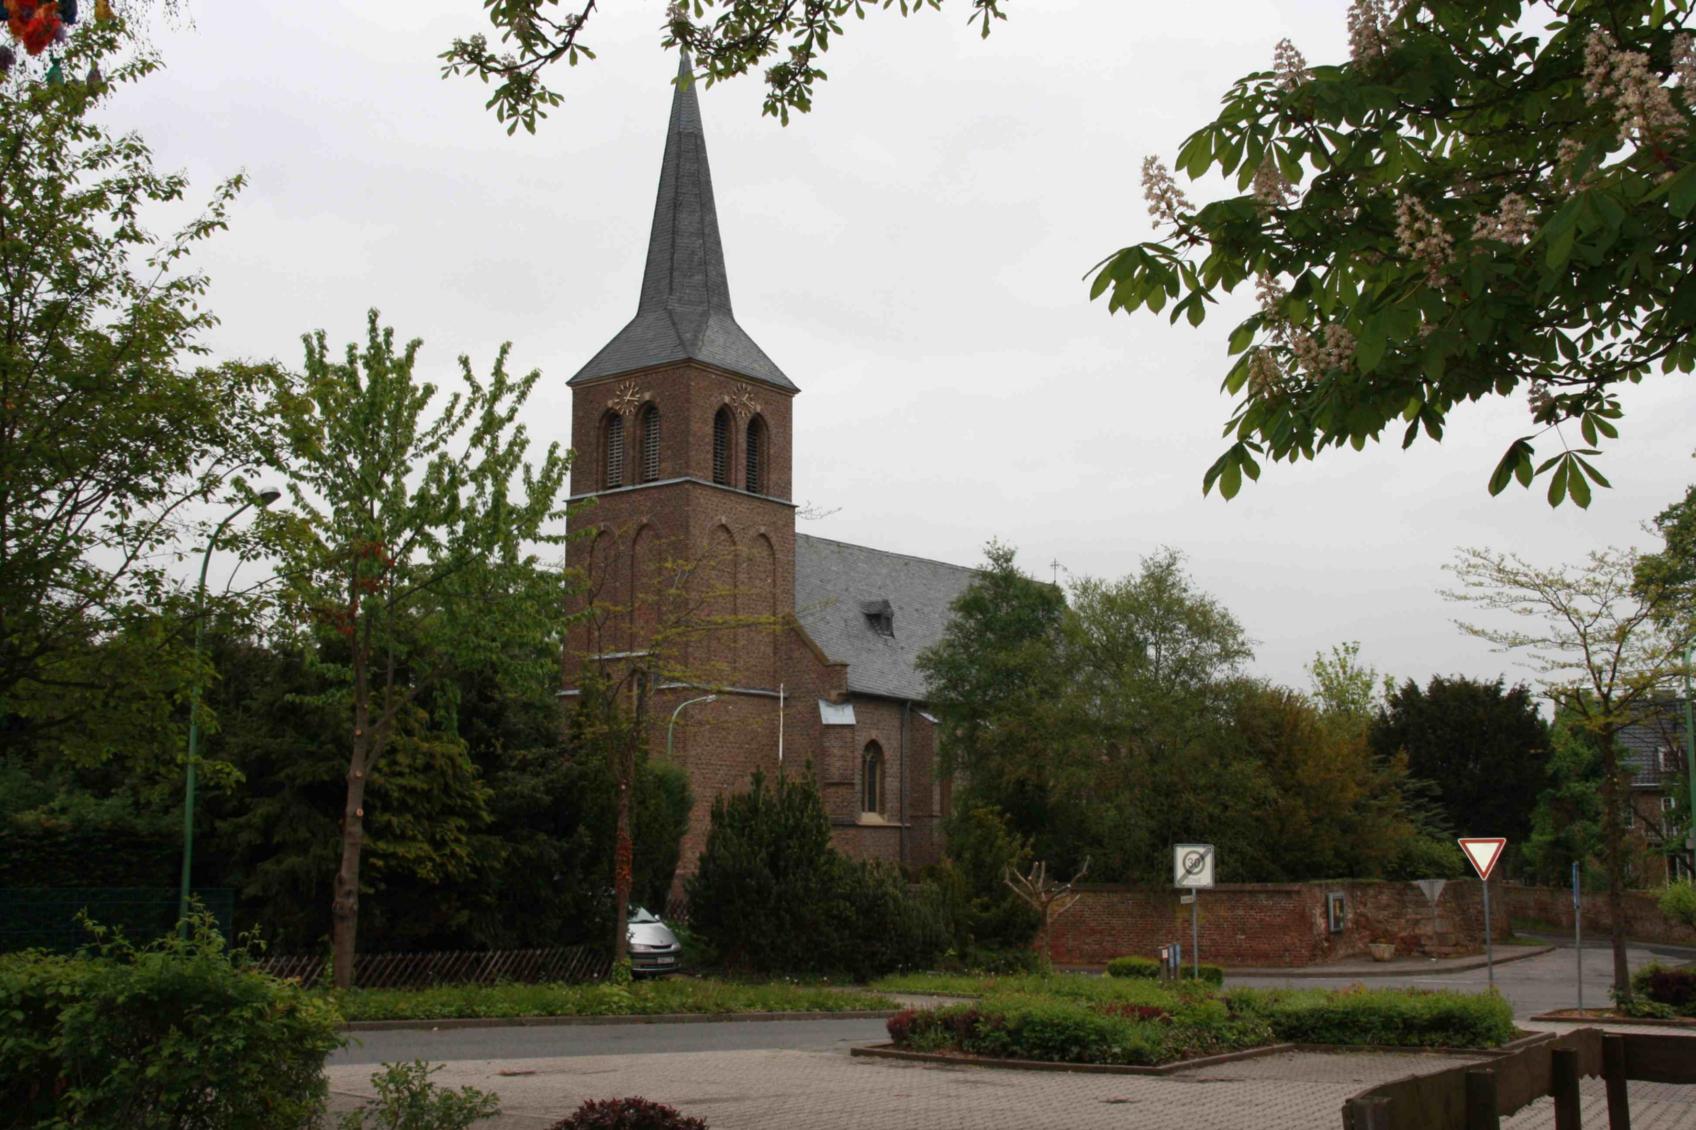 Kirche St. Gertrudis Binsfeld (c) Von papa1234 - Eigenes Werk, CC BY 3.0, https://commons.wikimedia.org/w/index.php?curid=10331792